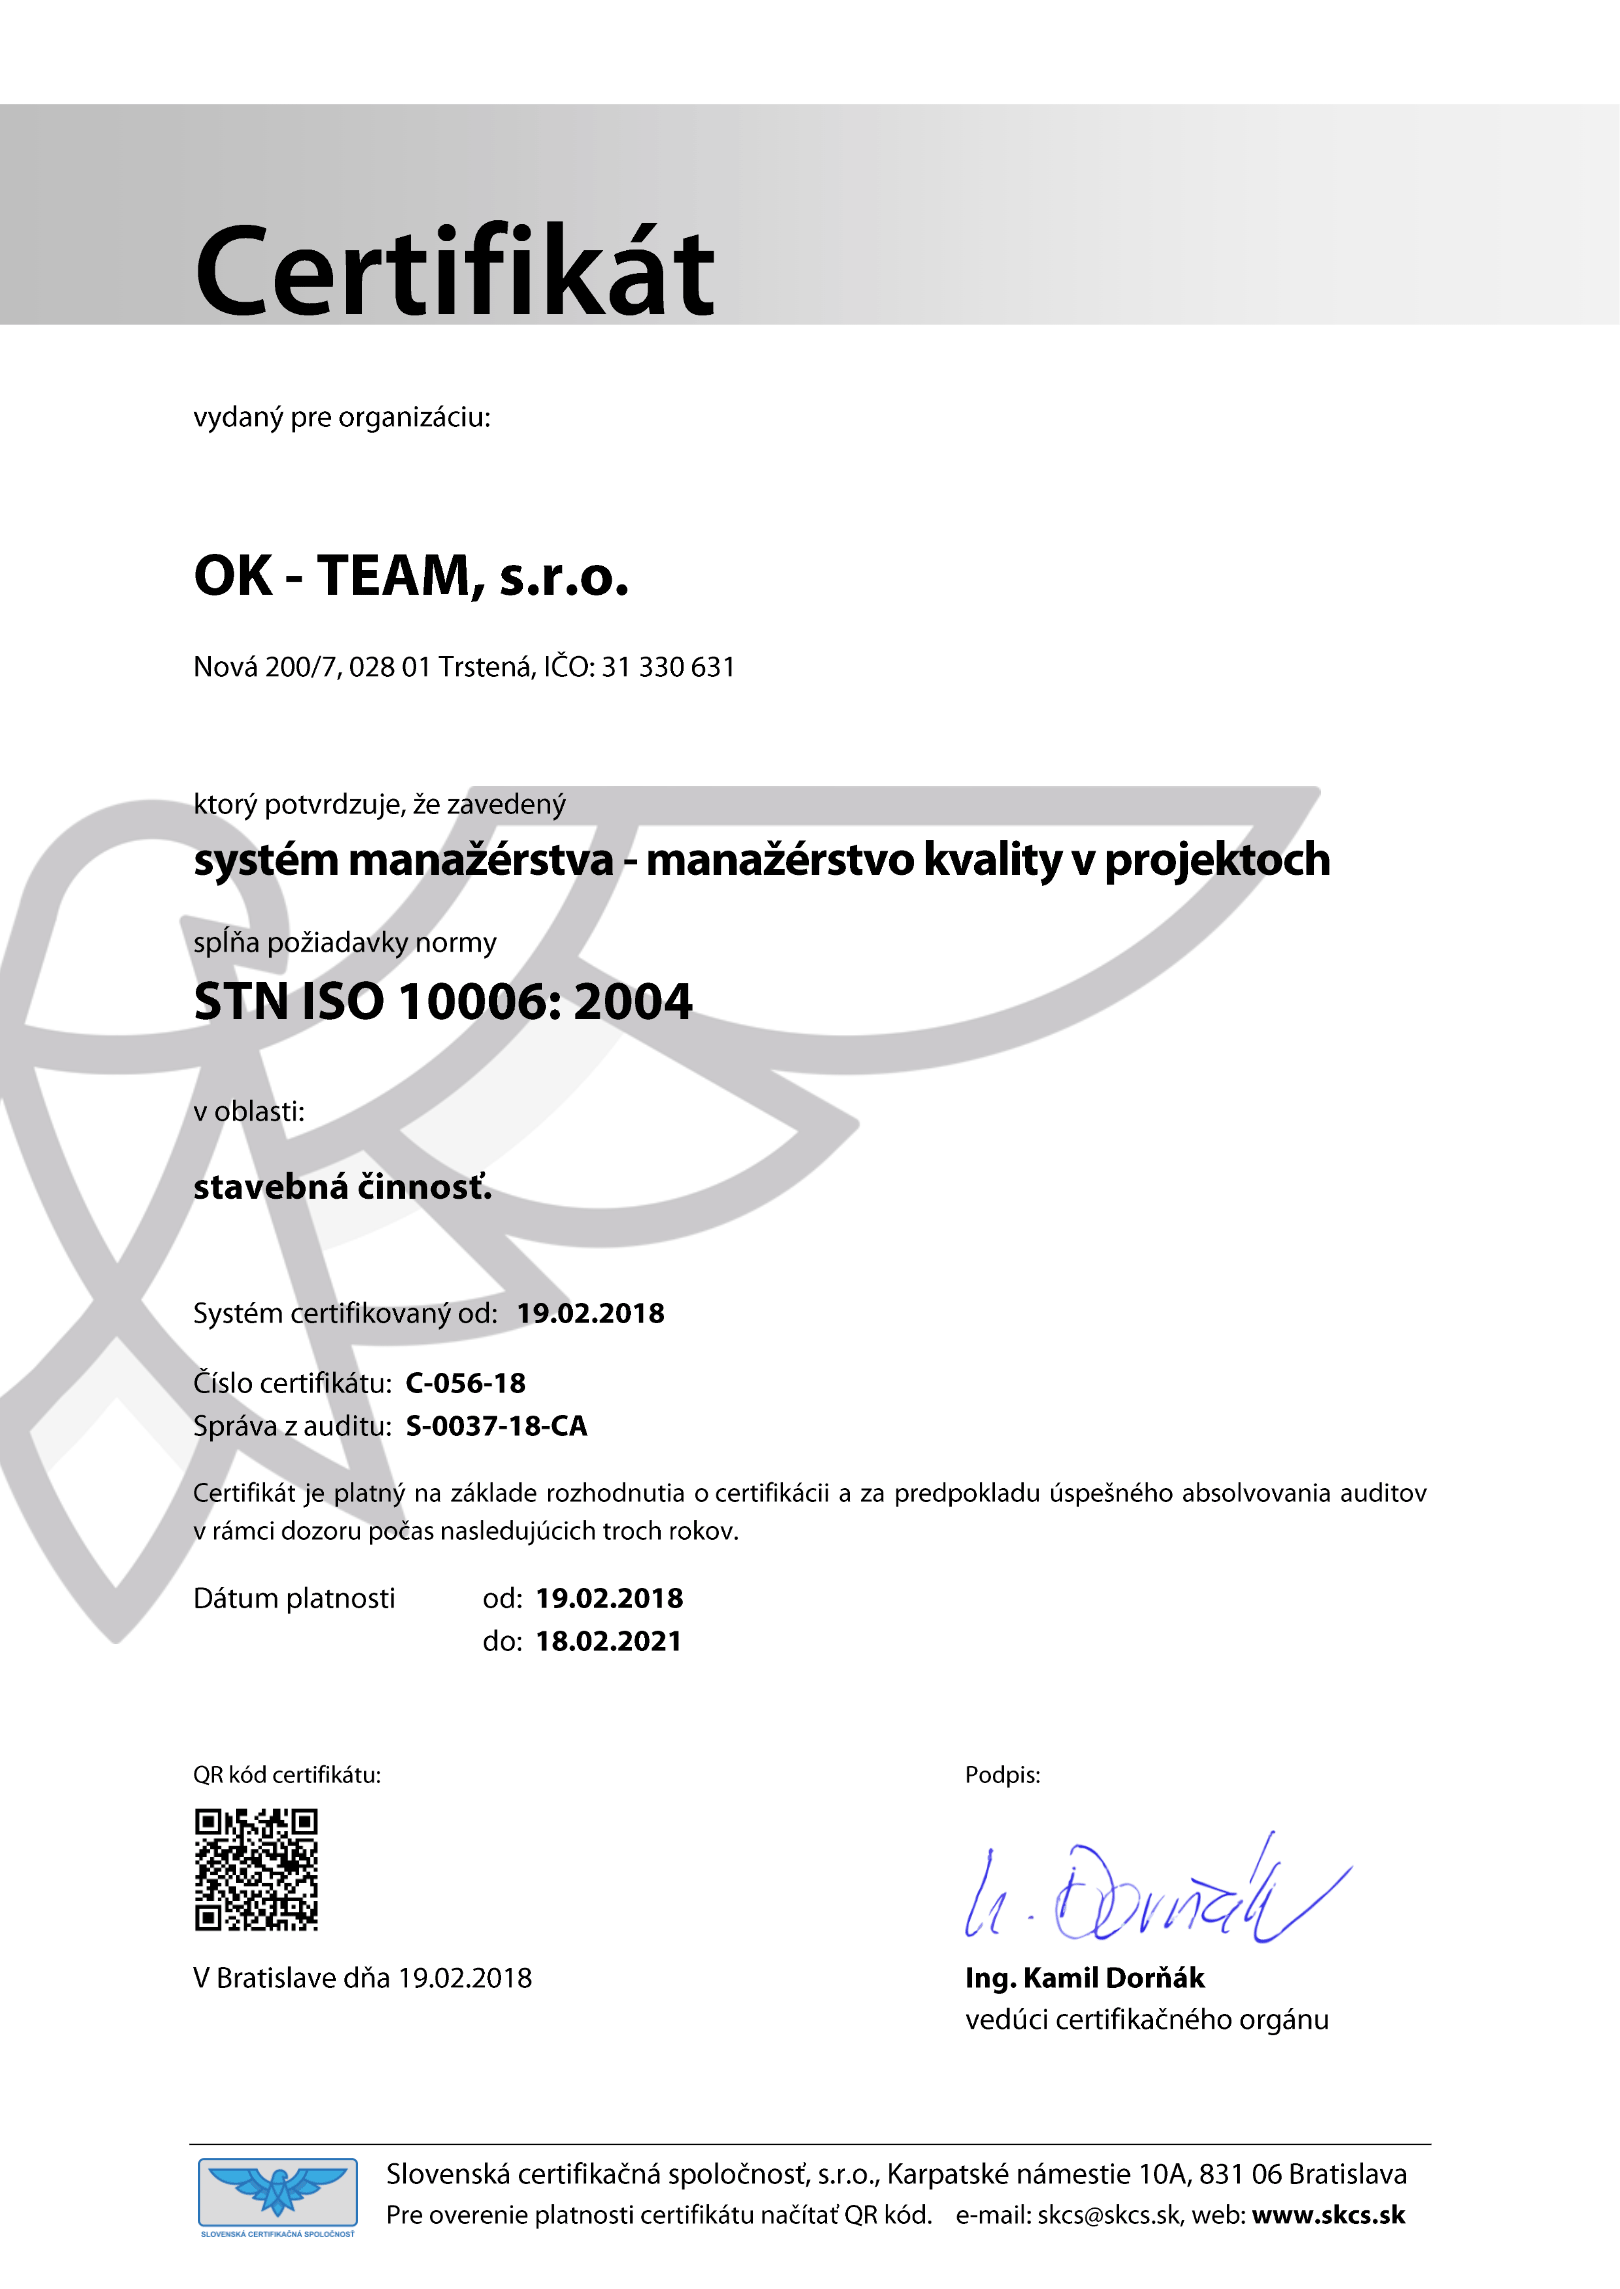 Certifikát Kvality OK-Team 2